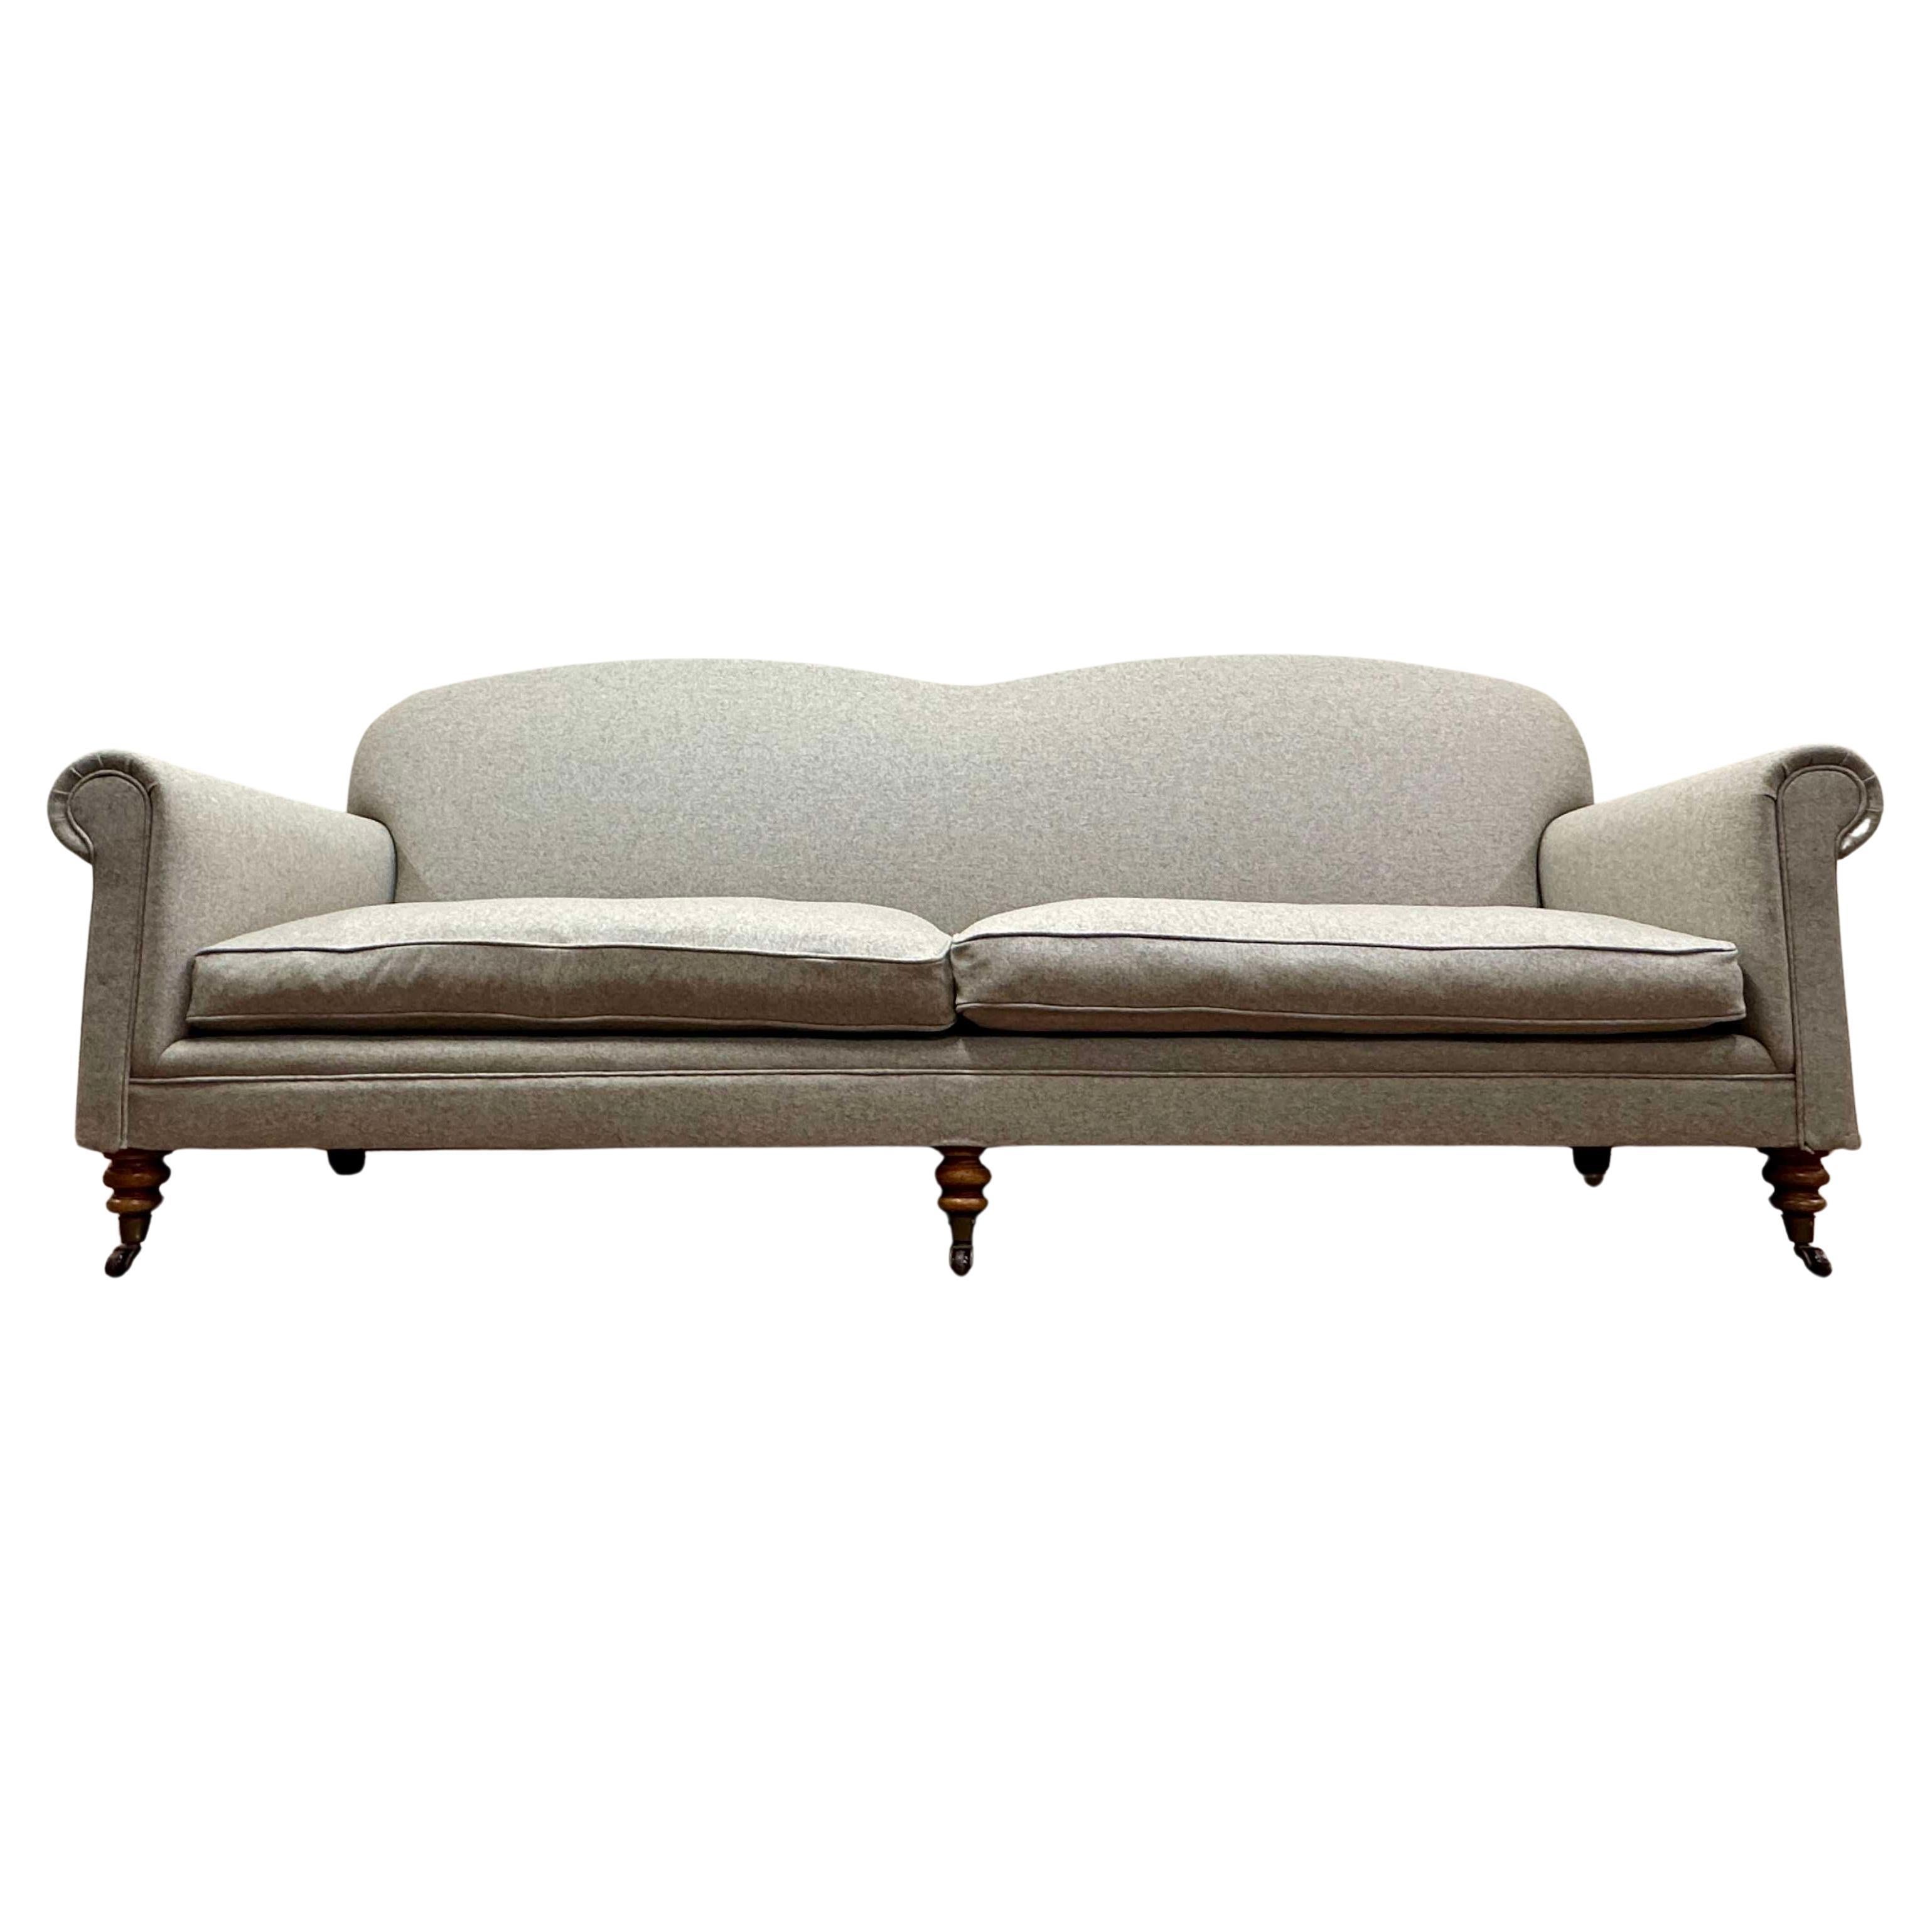 English C 1900 Camel Back Upholstered Sofa For Sale